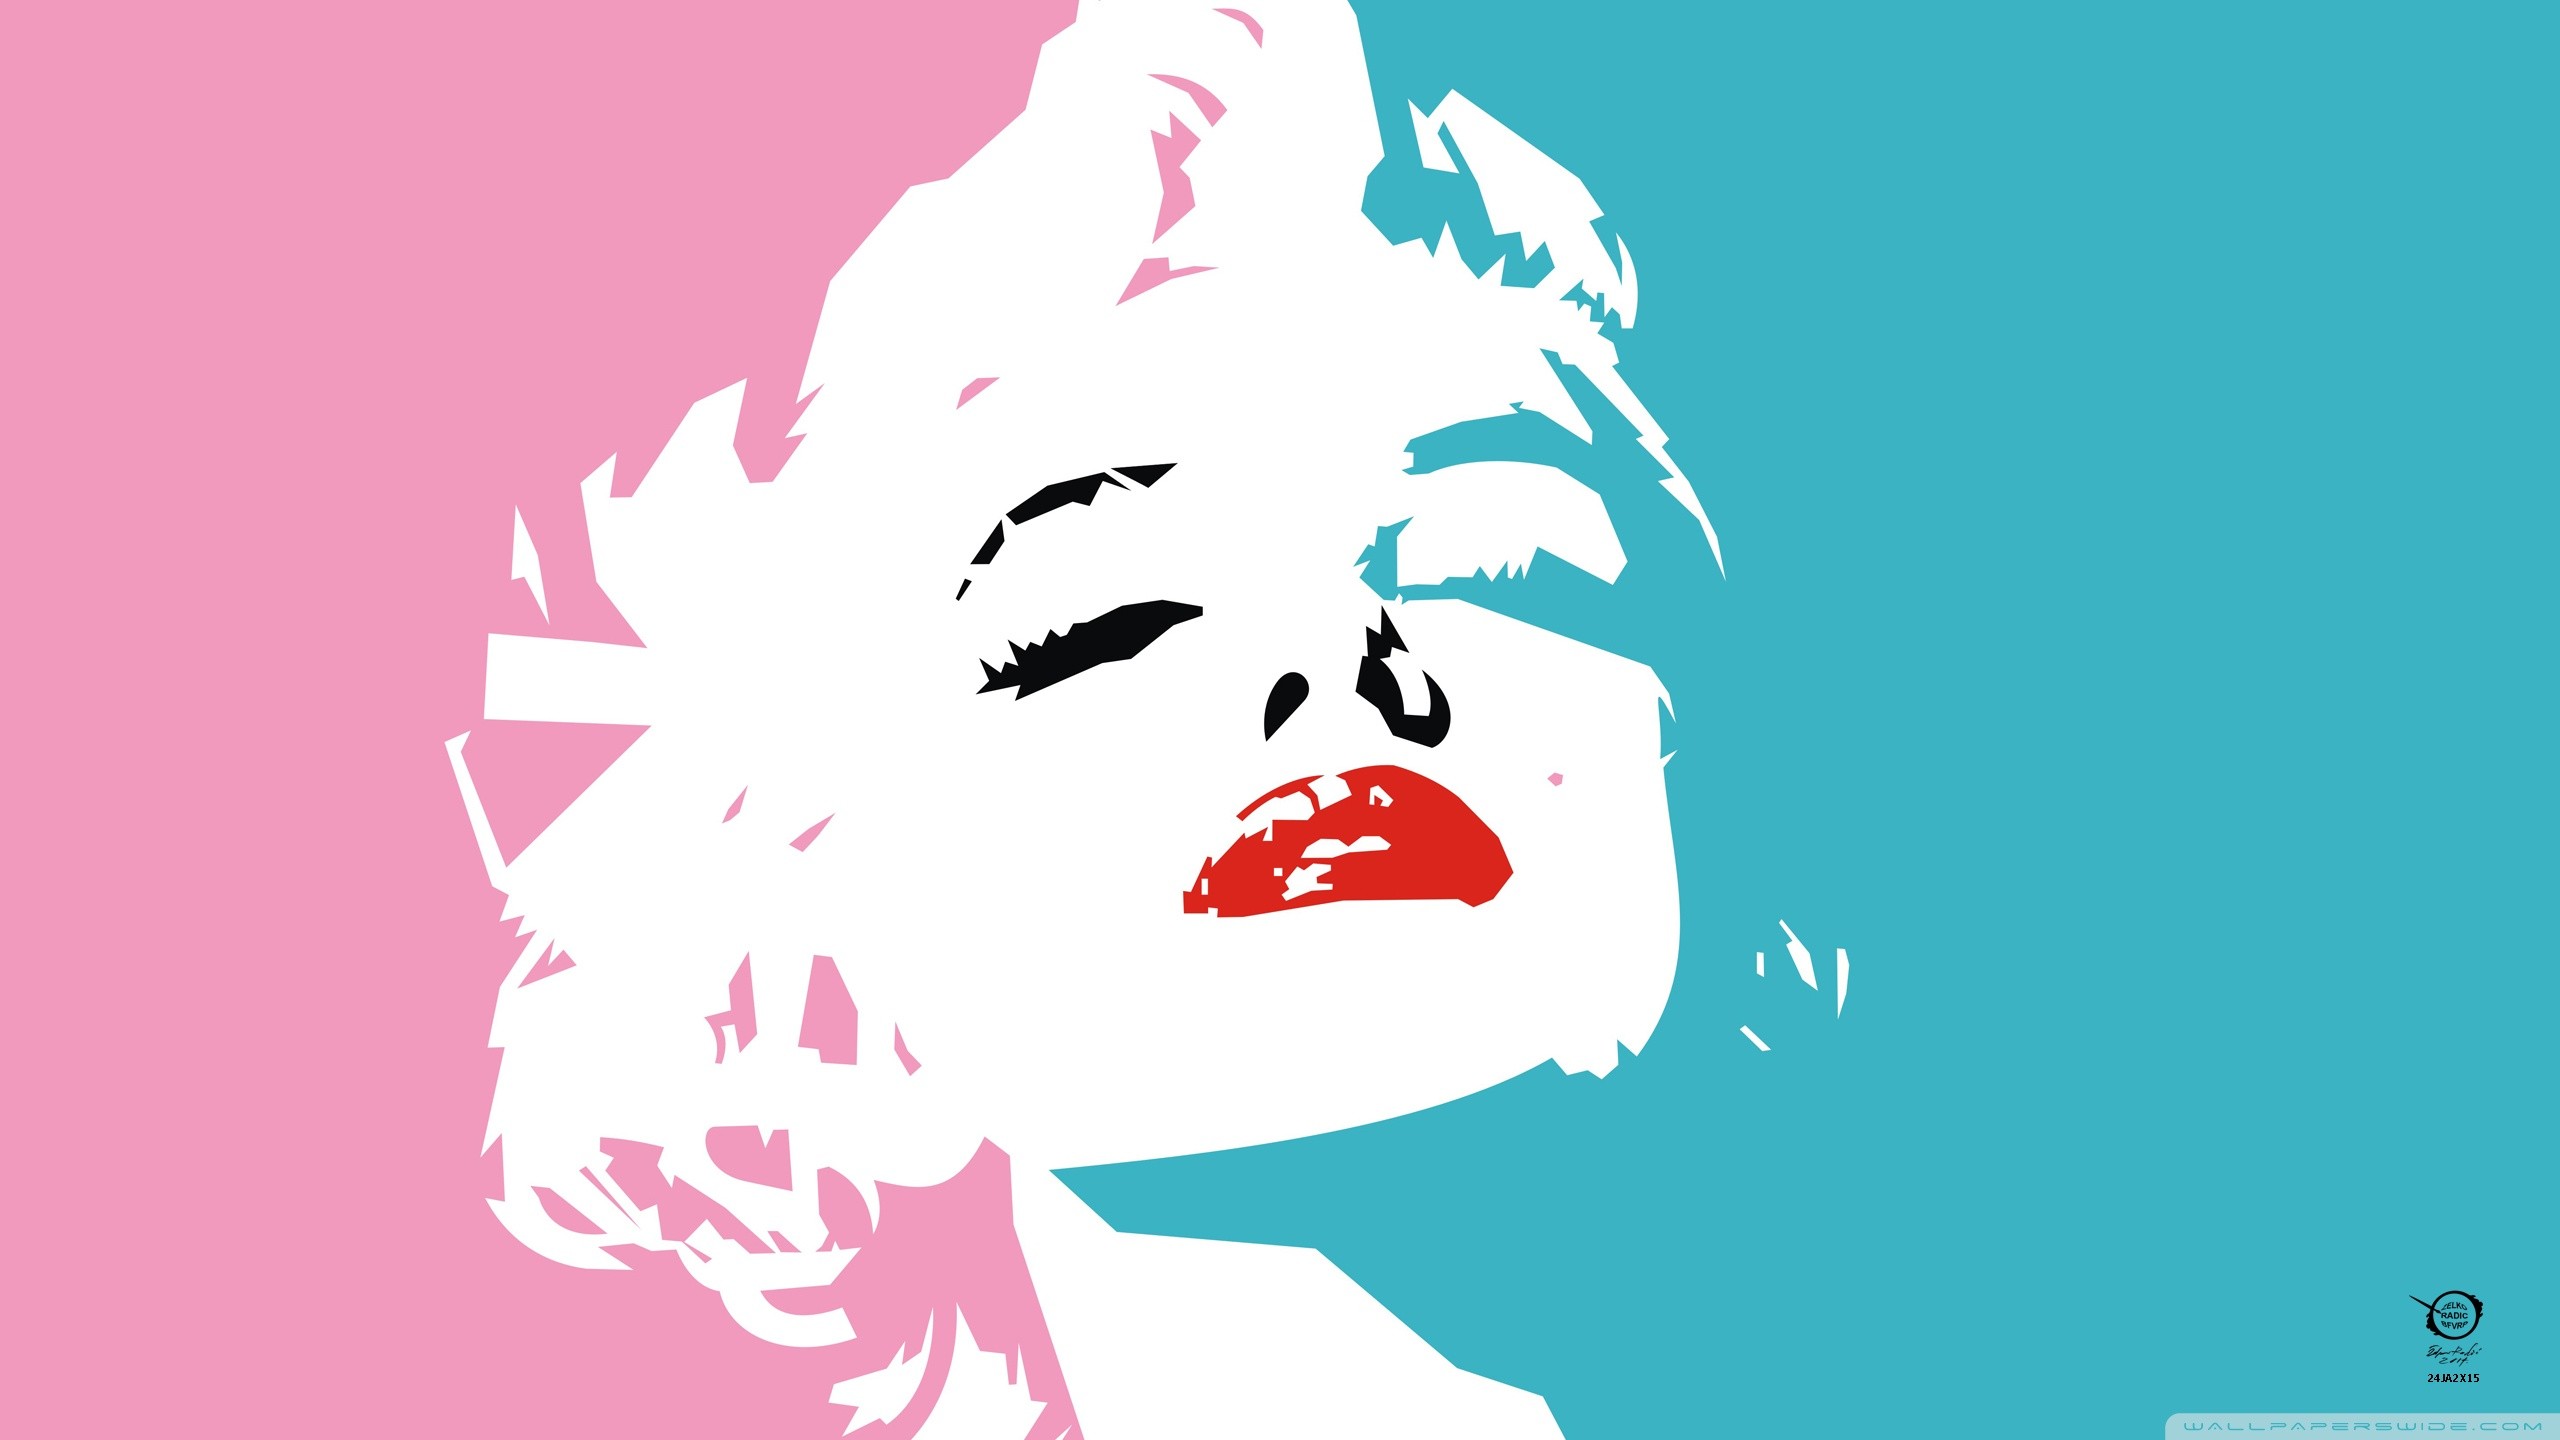 General 2560x1440 Marilyn Monroe celebrity pink blue colorful artwork cyan red lipstick face actress deceased digital art watermarked